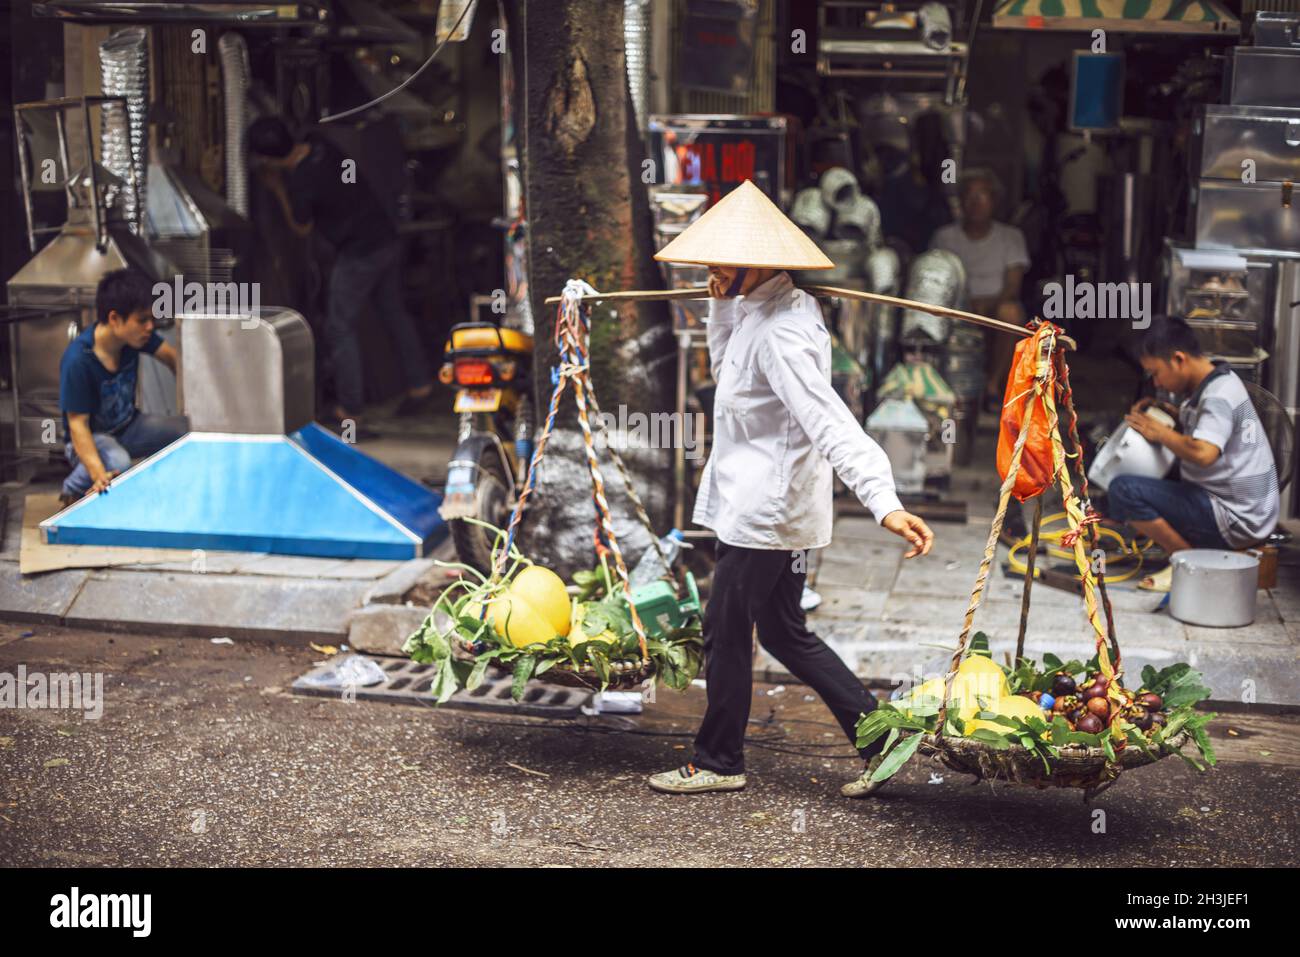 Hanoi, Vietnam - May 2, 2015: Vietnamese street market lady seller, on May 2, 2015, in Hanoi, Vietnam Stock Photo